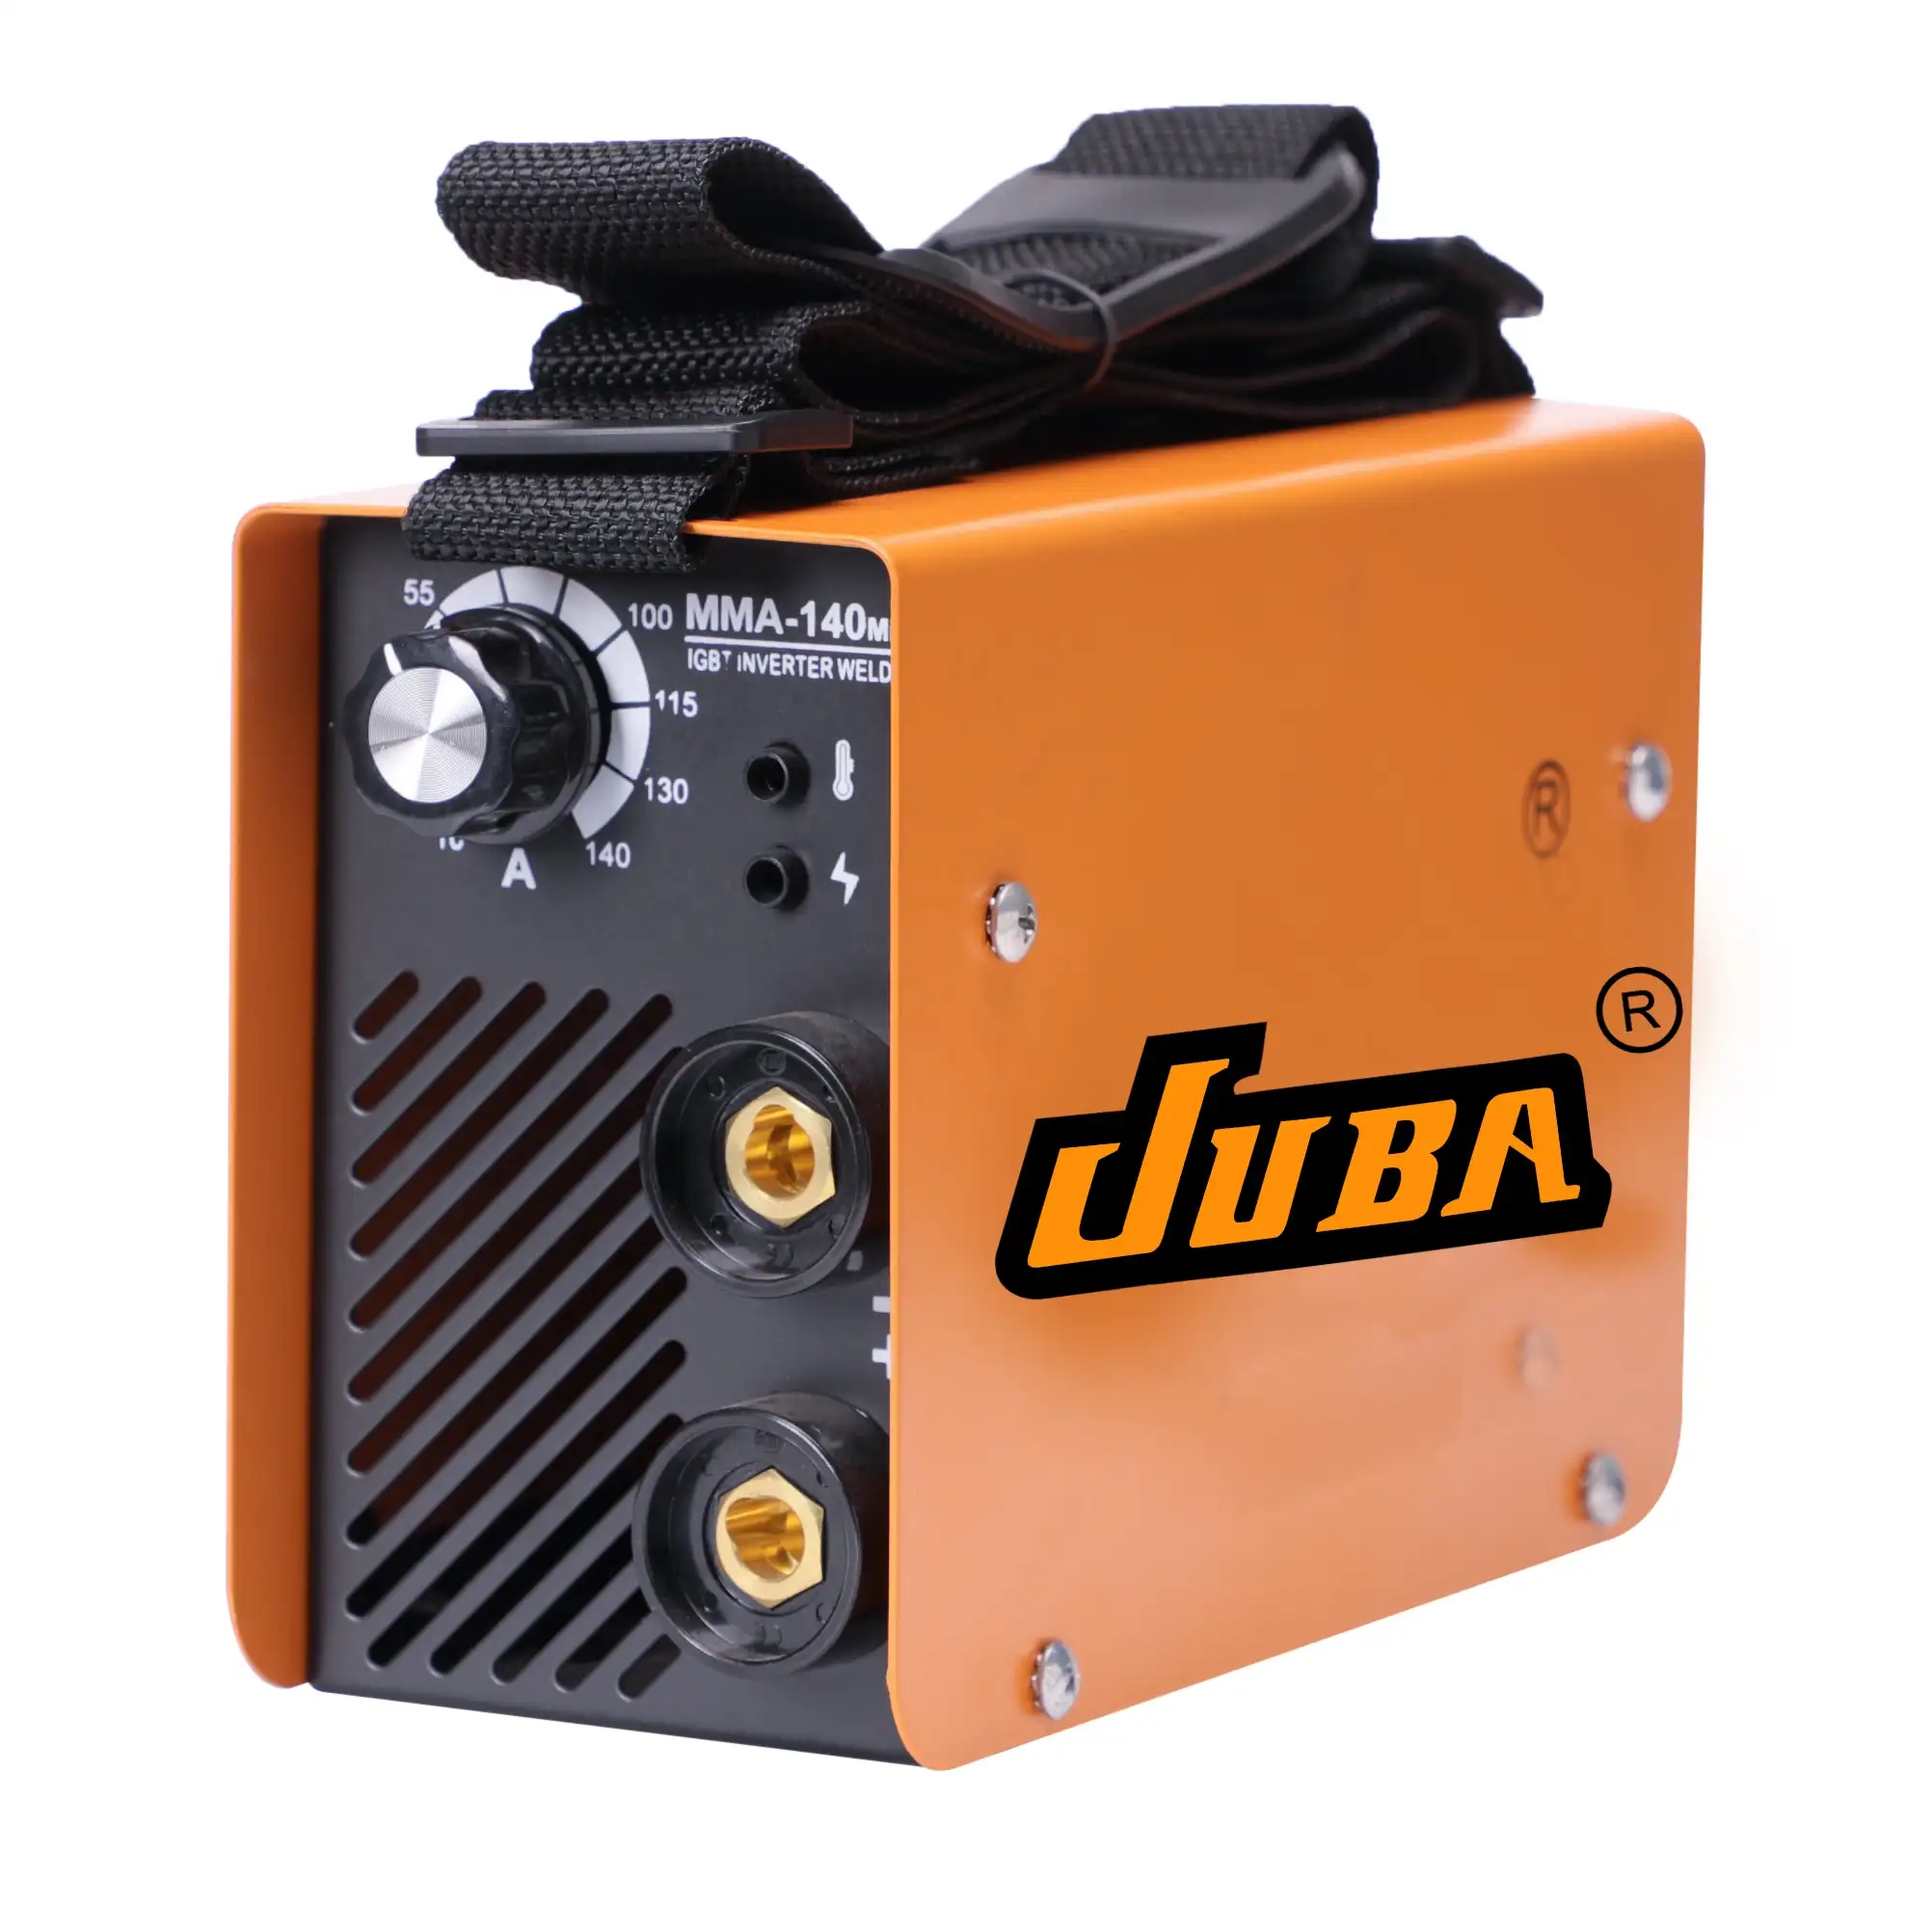 JUBA-mini soldador manual, mma 110, 220v, 160 v, igbt